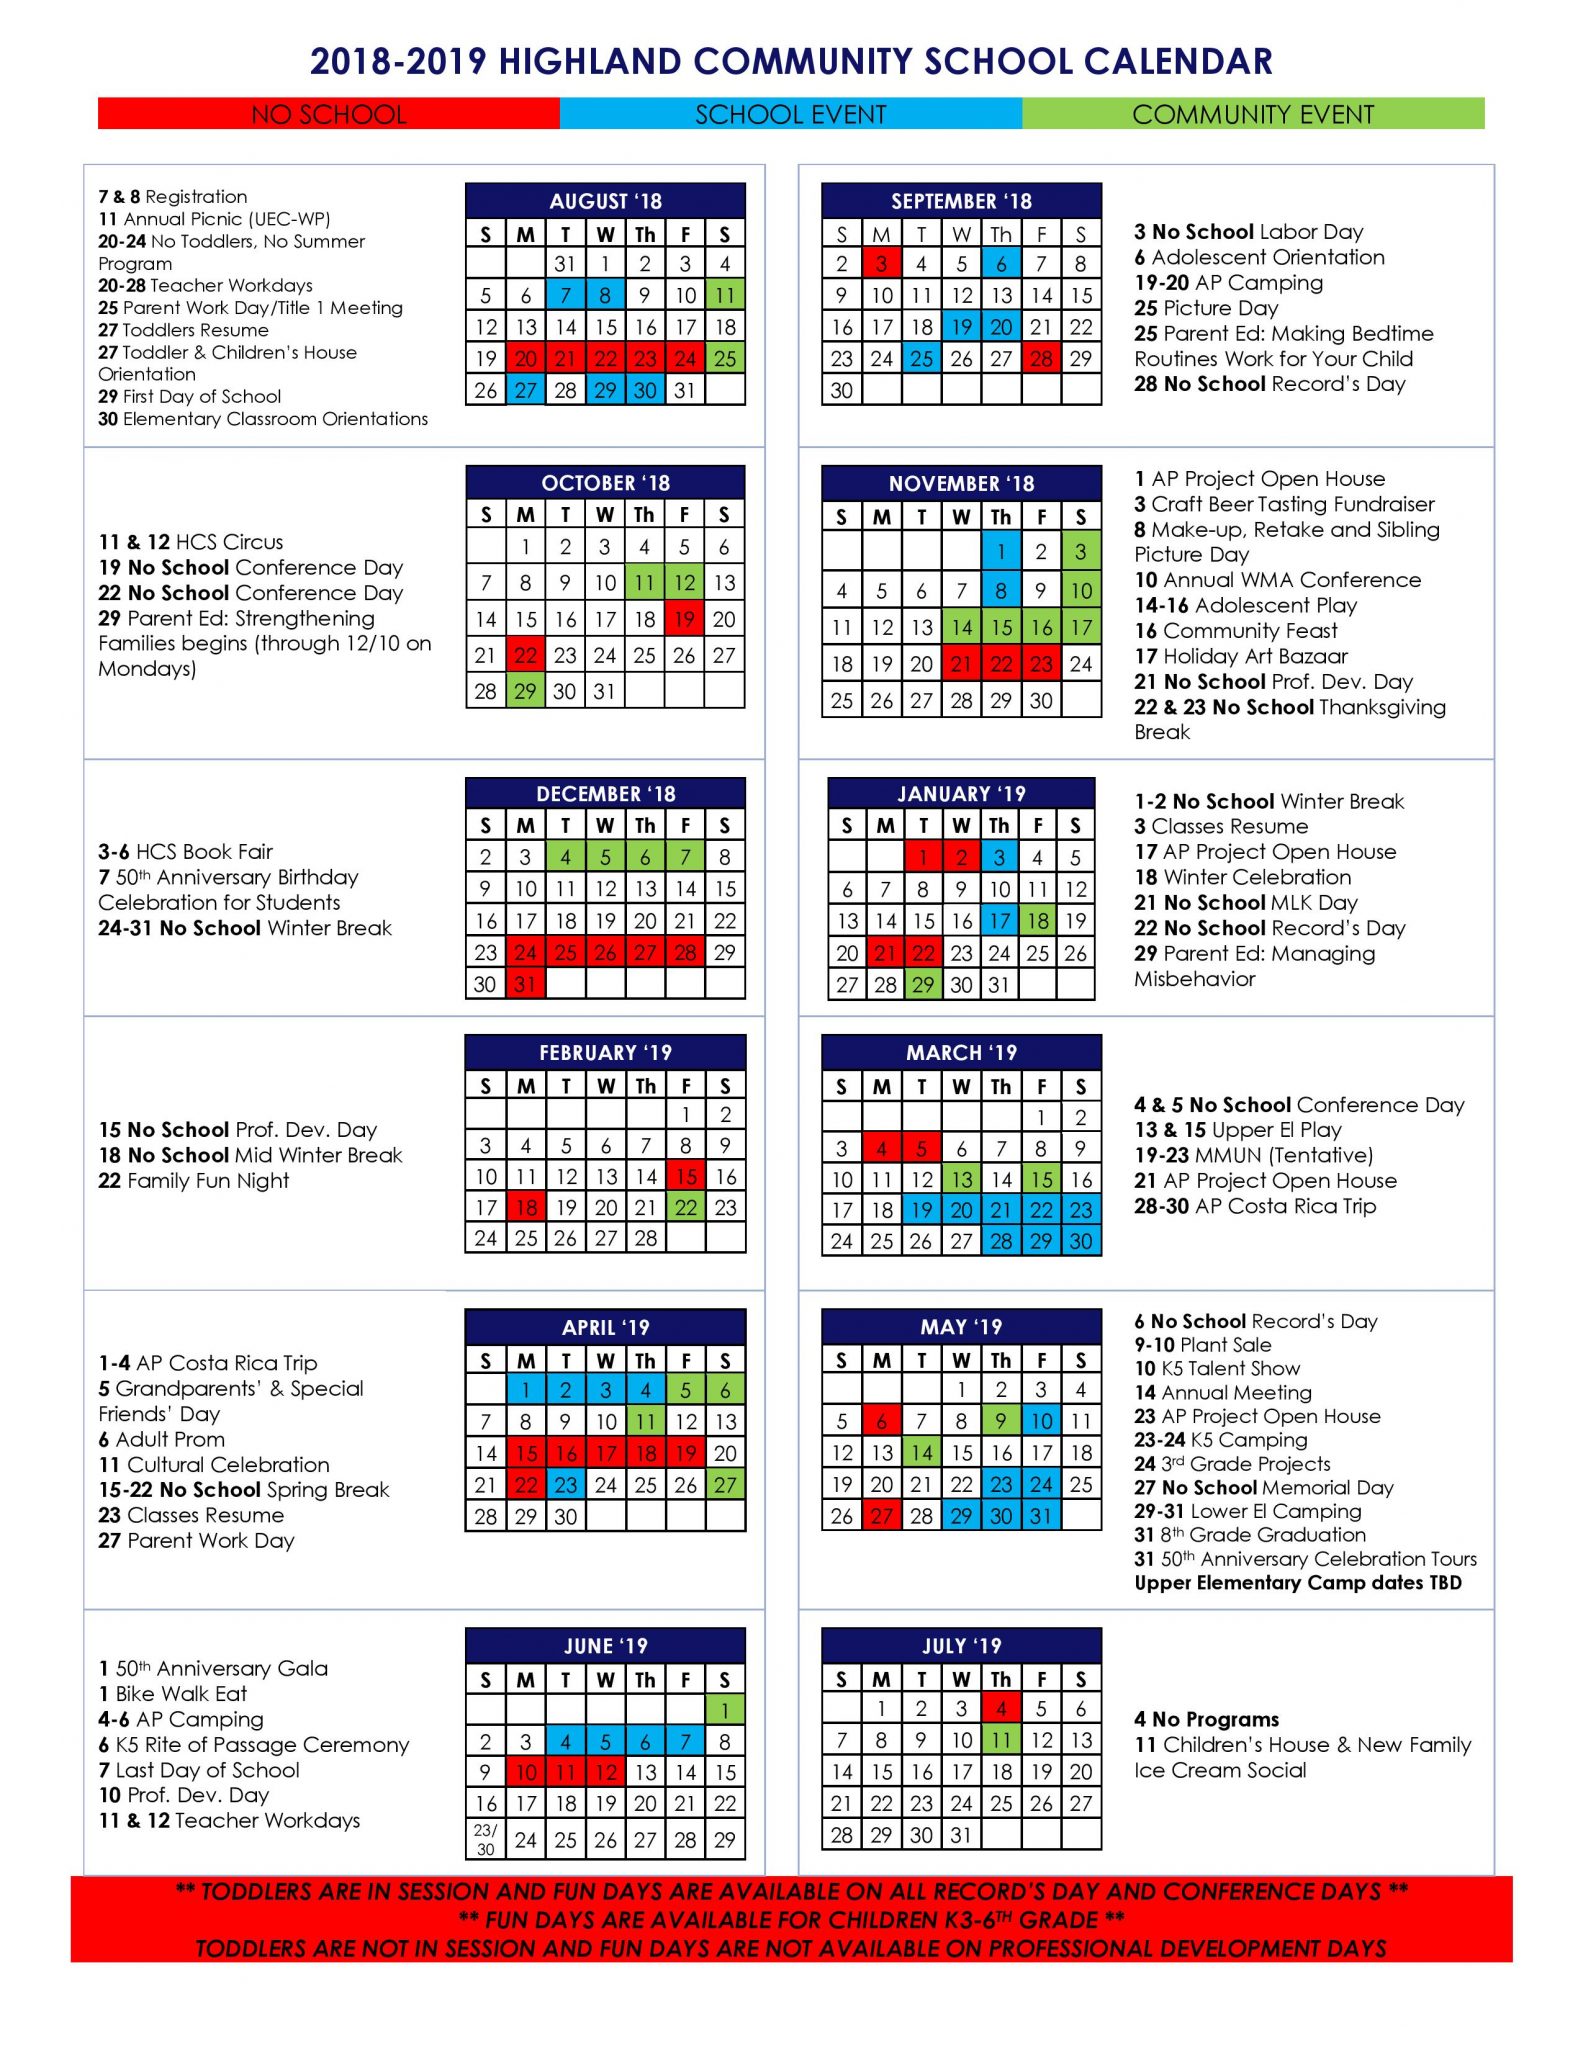 Events Calendar Highland Community School